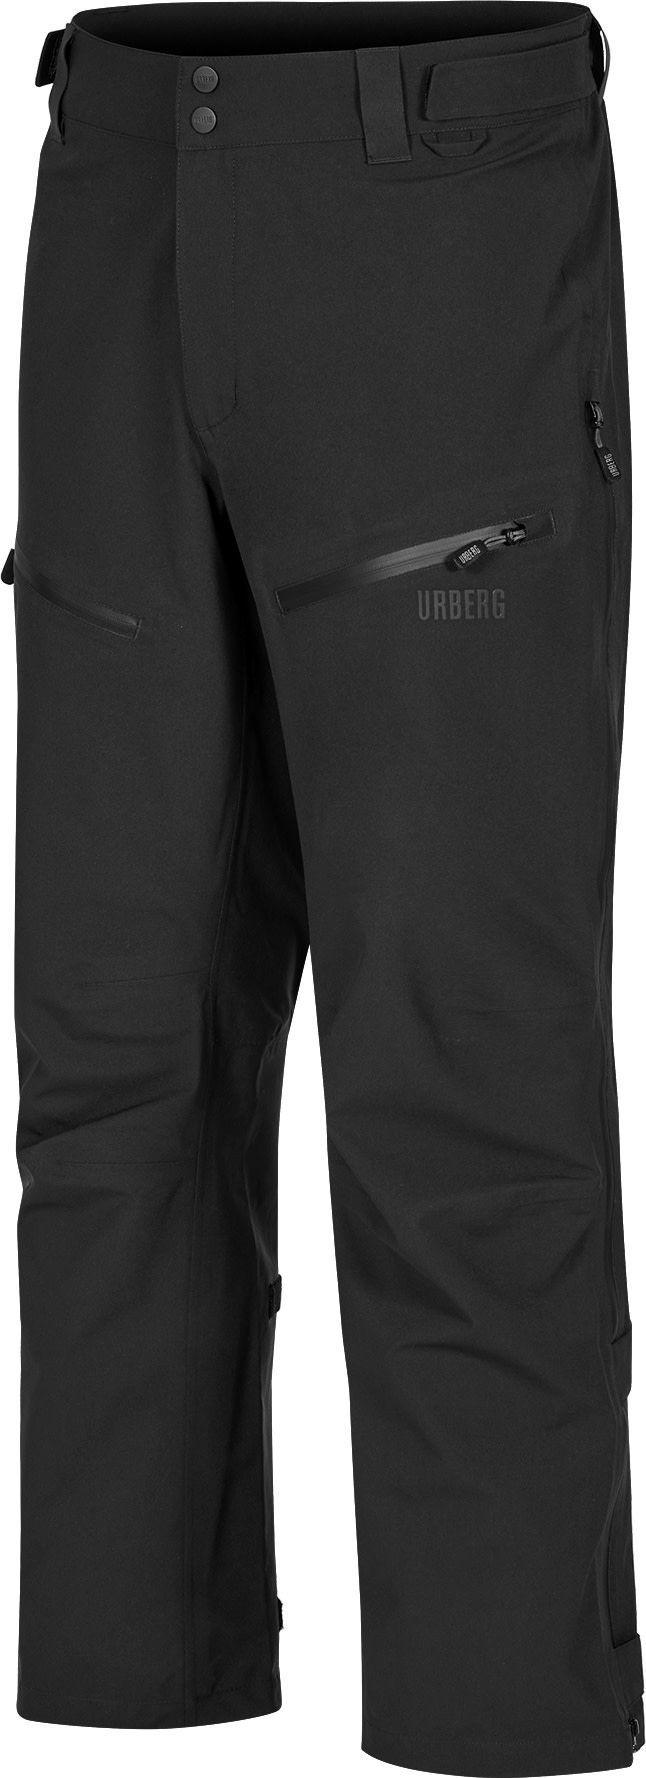 Urberg Men's 3L Shell Pants Black Beauty Urberg